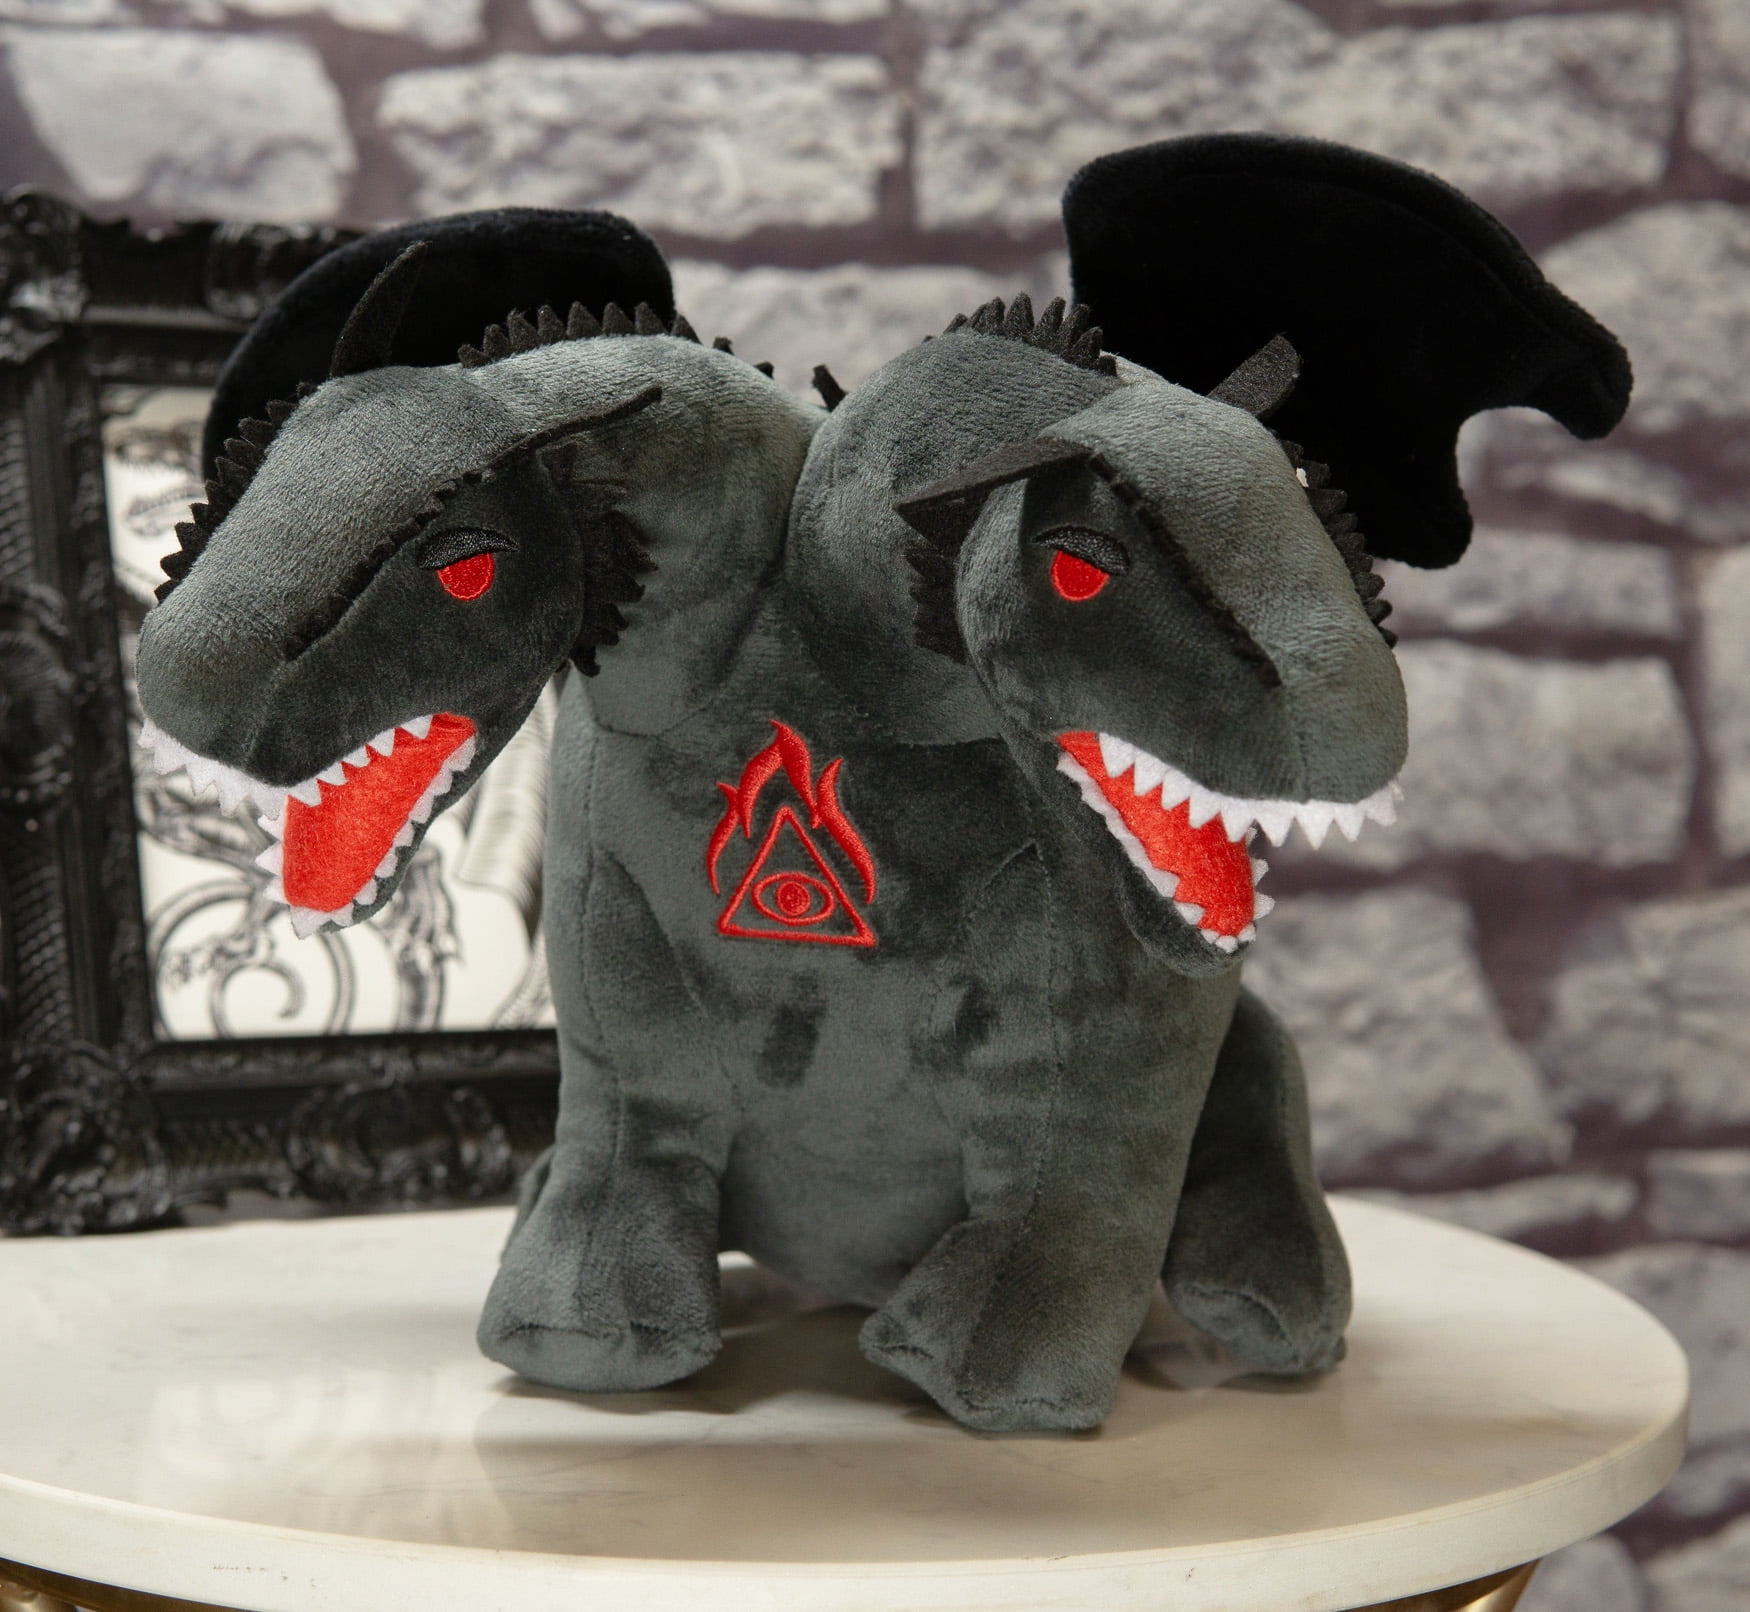 2-headed Dragon Safari Ltd # 10144 Hydra Mythical Fantasy Toy Figure for sale online 